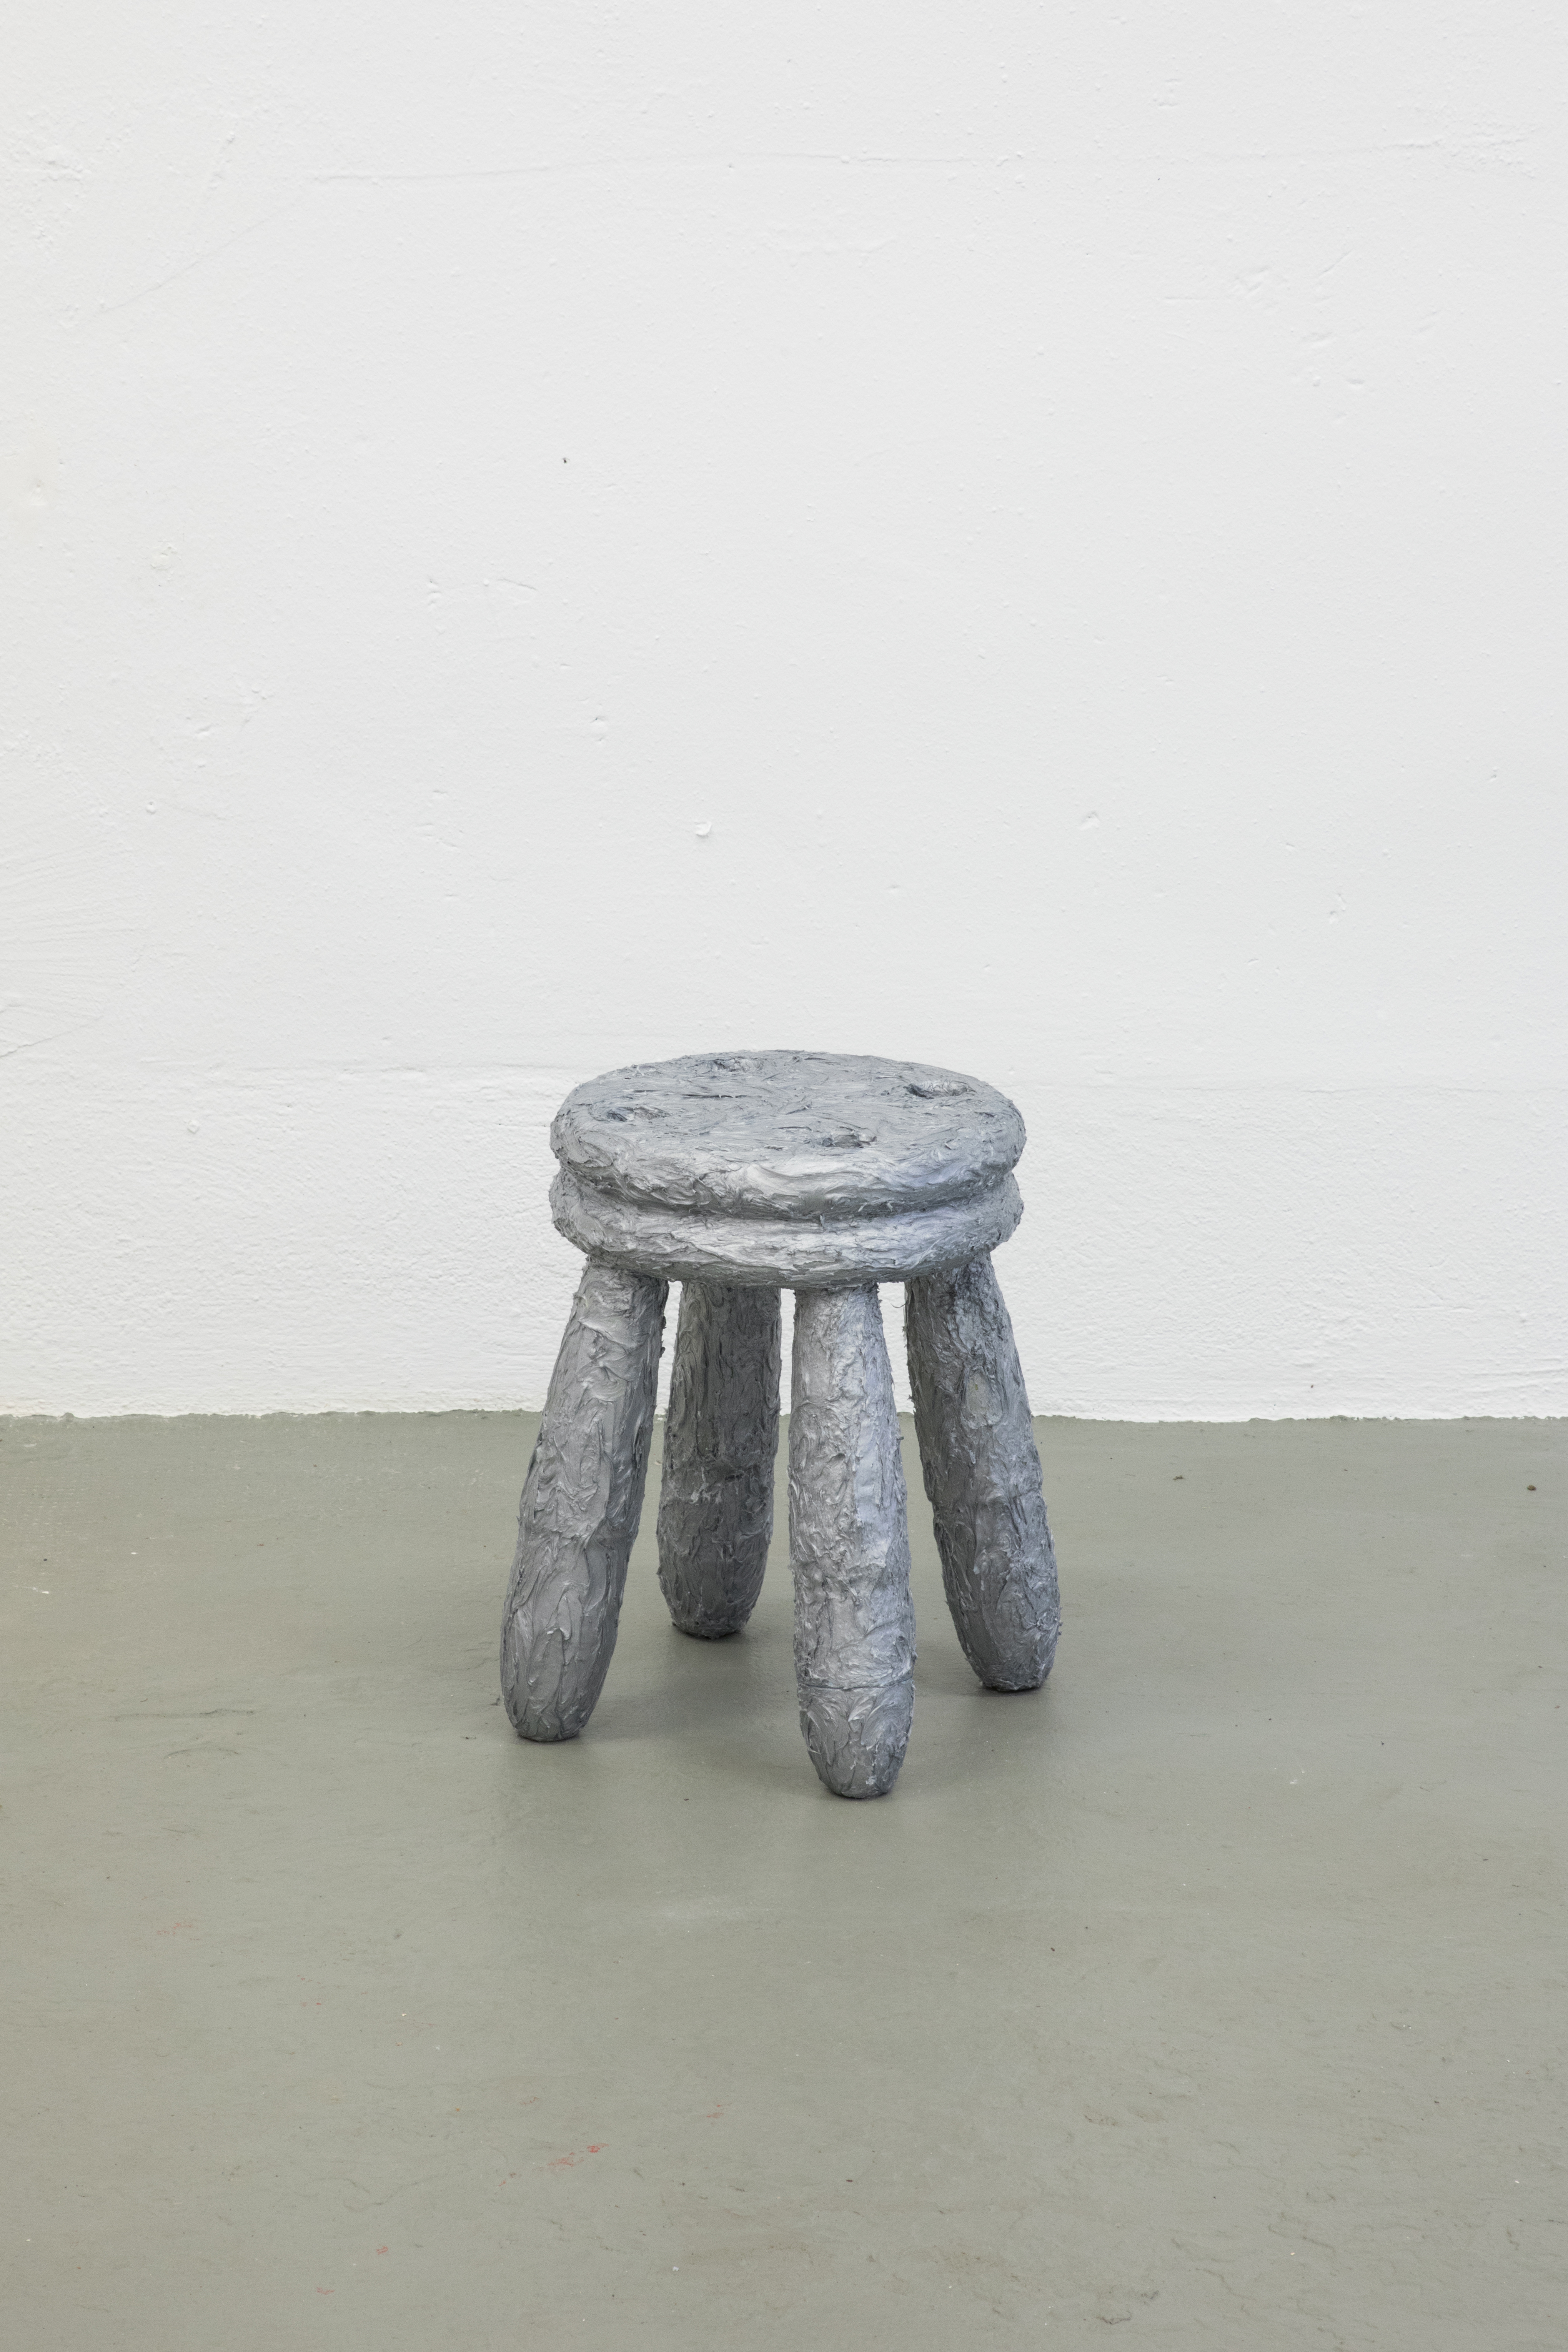 Jannis Zell, *Mamamutu*, silicon, IKEA children's stool